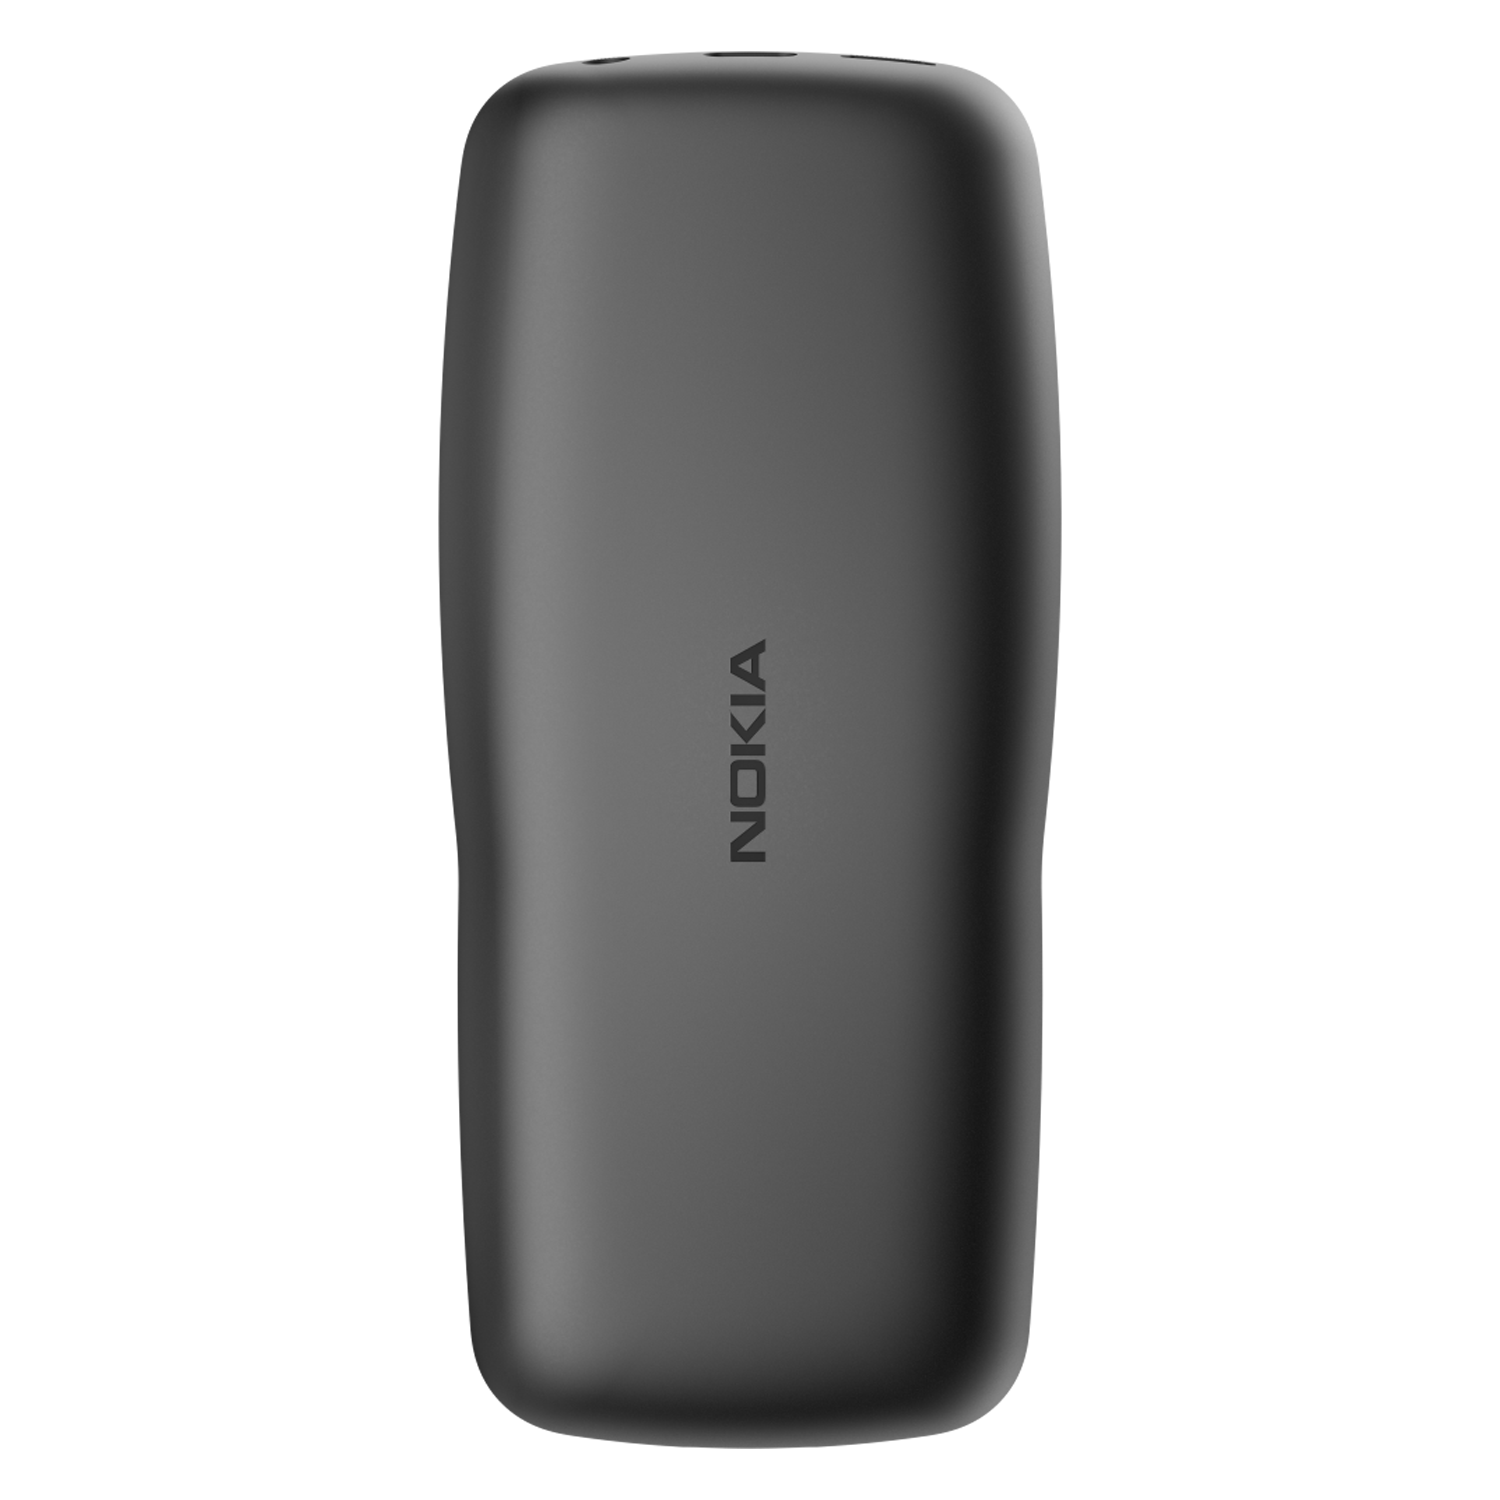 Celular Nokia 106 TA-1190 Single SIM Tela 1.8" - Preto Cinza